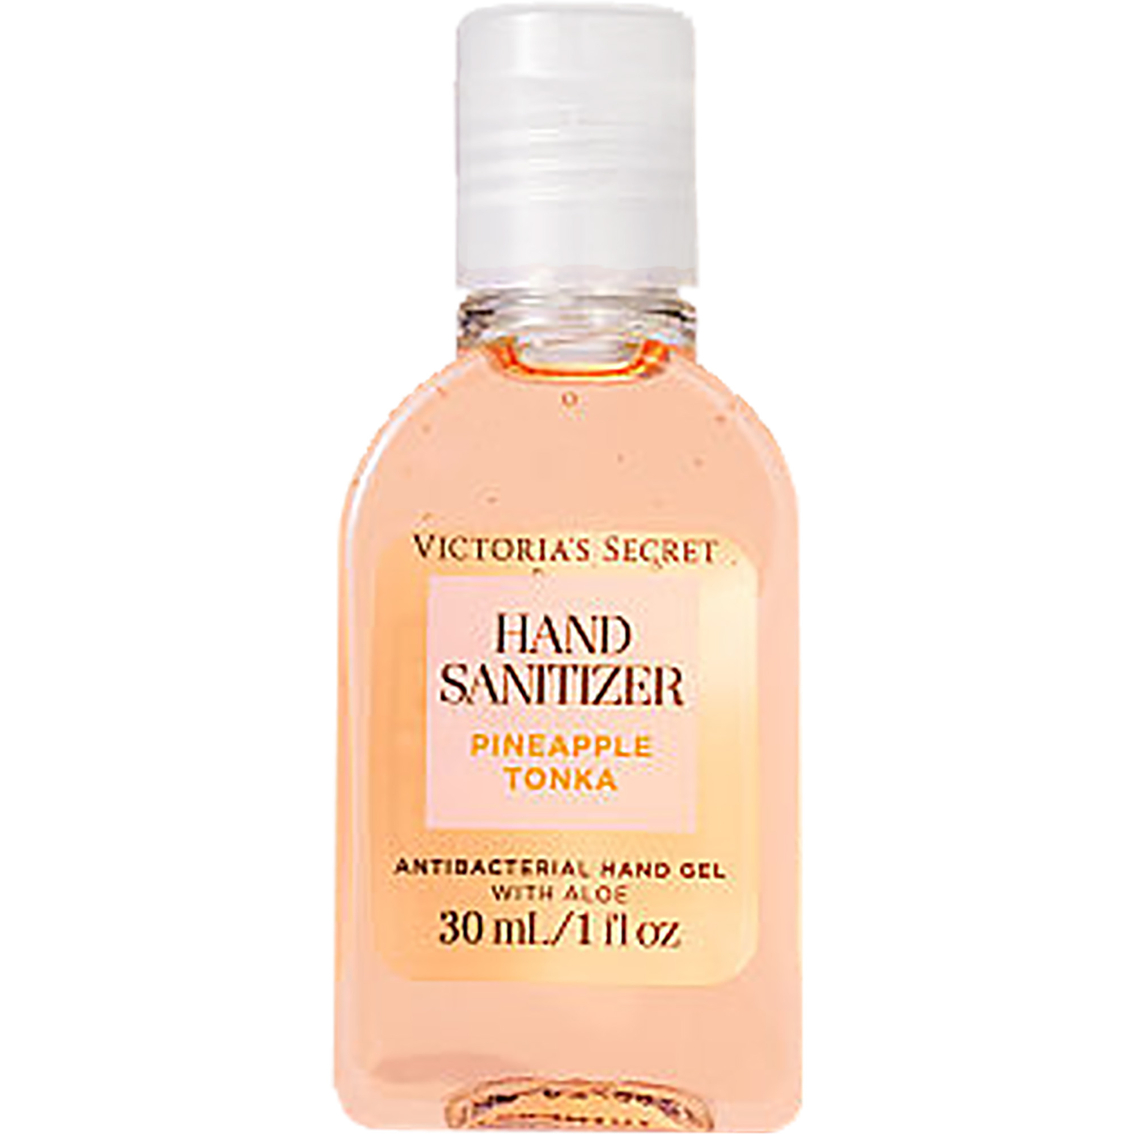 Victoria's Secret 1 oz. Gel Hand Sanitizer Pineapple Tonka